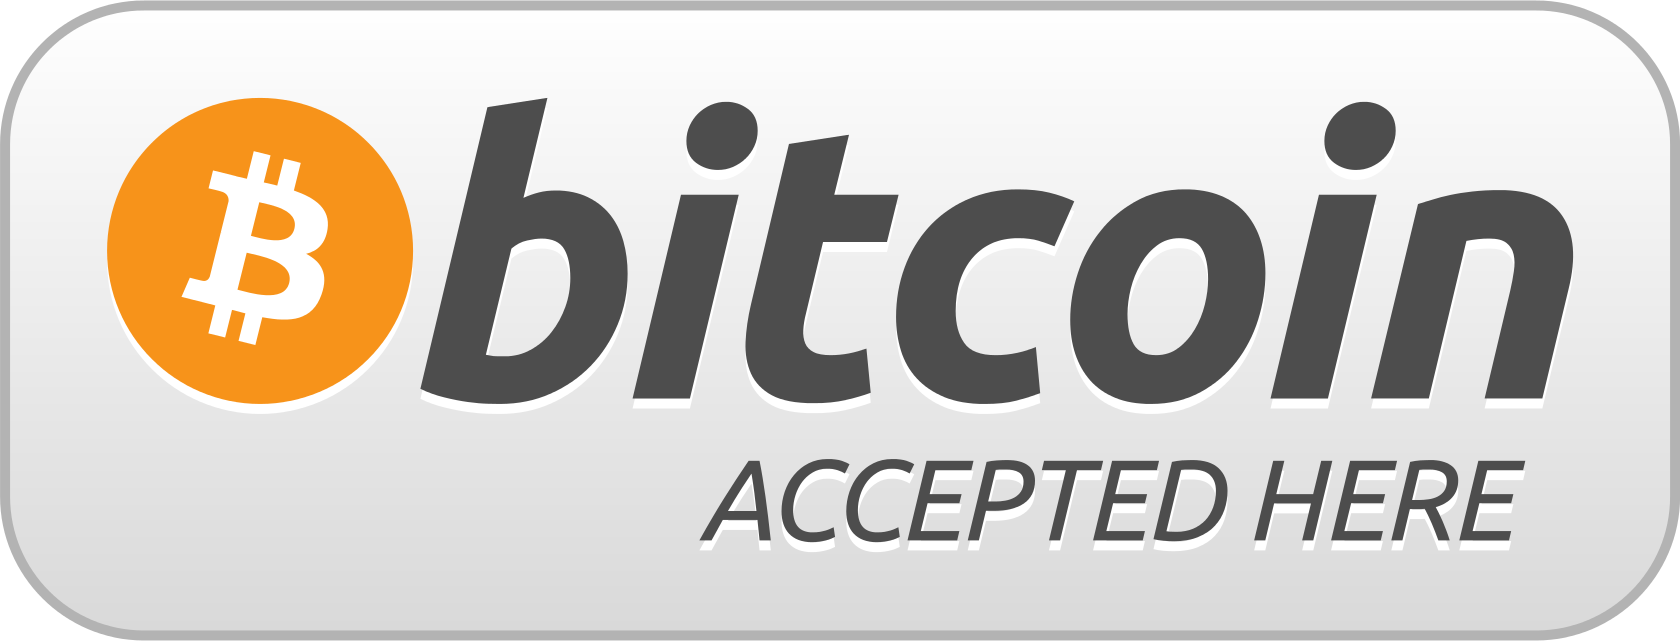 Melissa Accepts Bitcoin